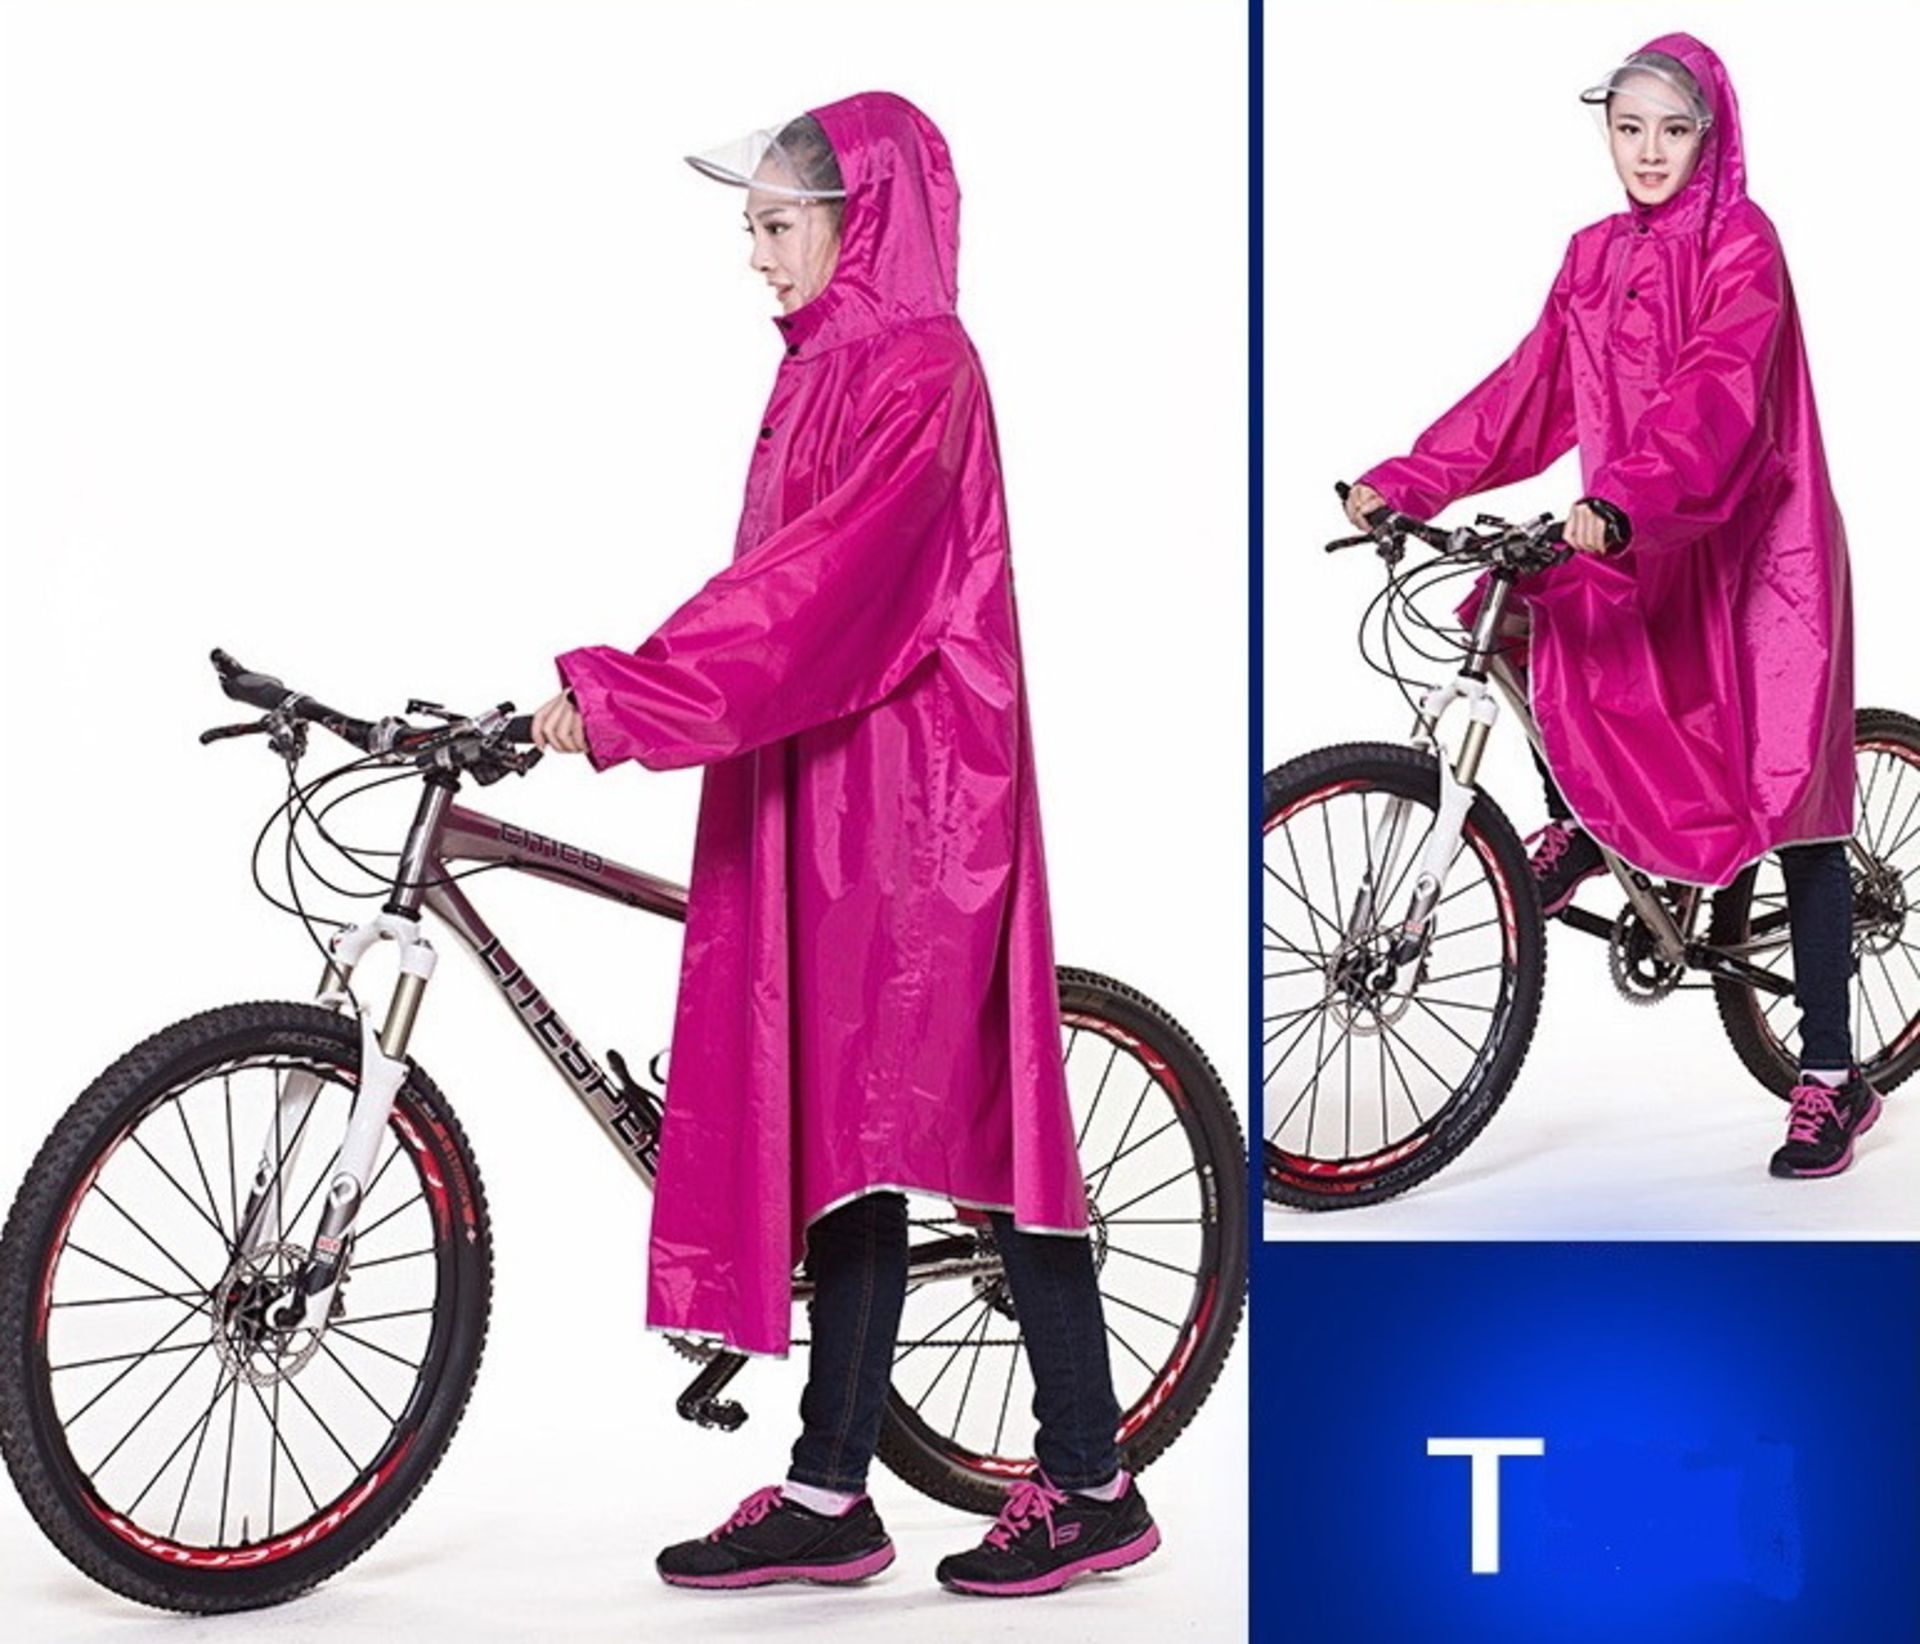 2 x bike ponchos - one purple, - Image 2 of 2